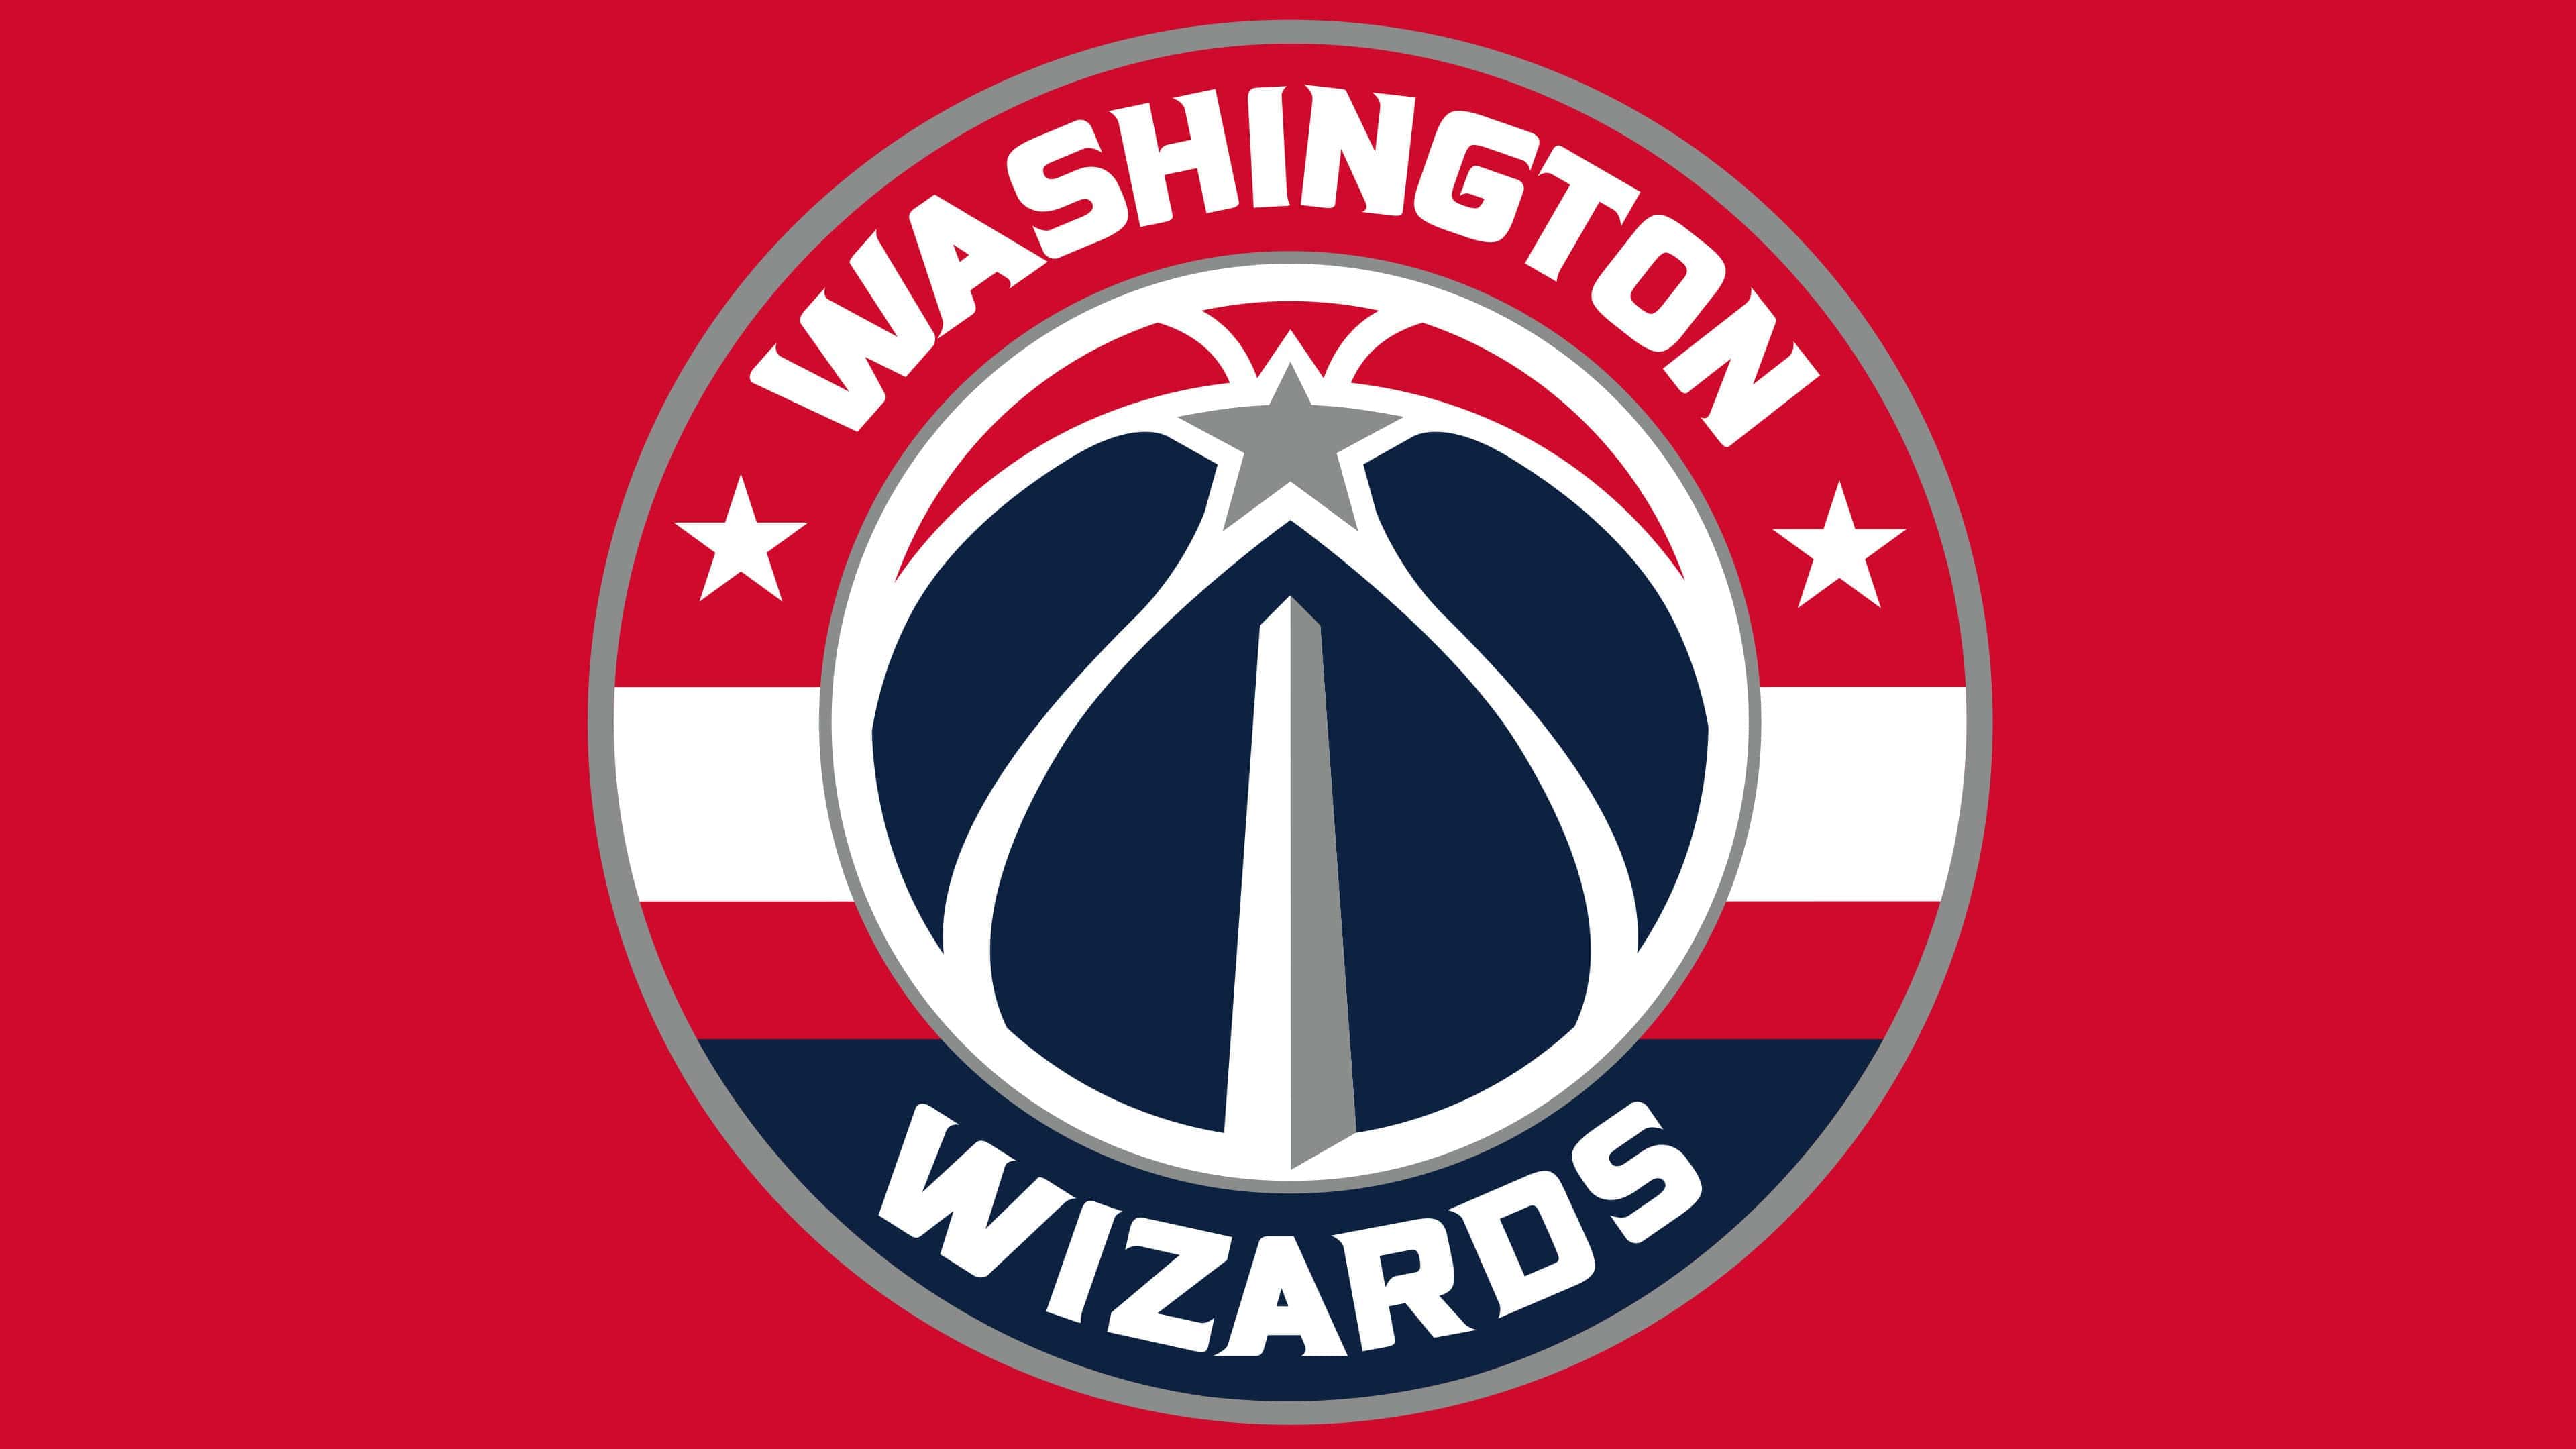 Washington Wizards Road Uniform  Washington wizards, Nba logo